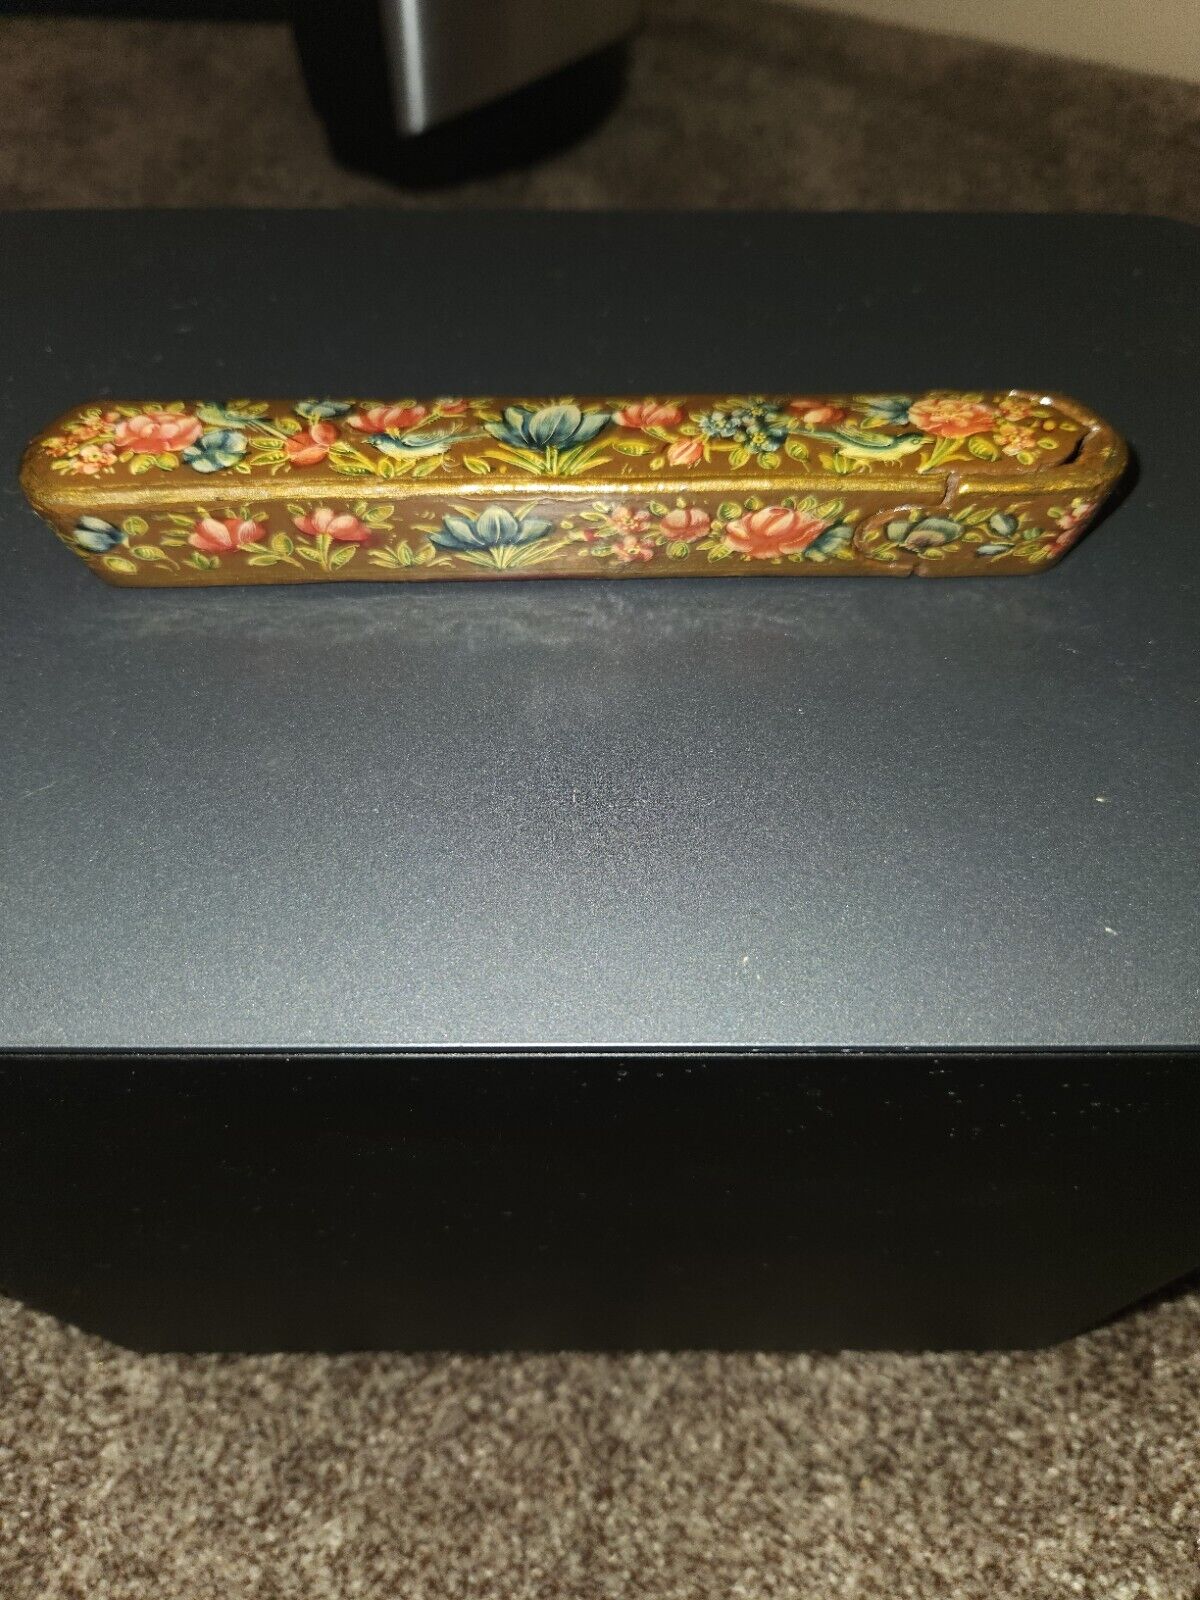 Antique Persian Qalamdan Paper Mache Laquered Pencil Holder 19th Century$300 OBO